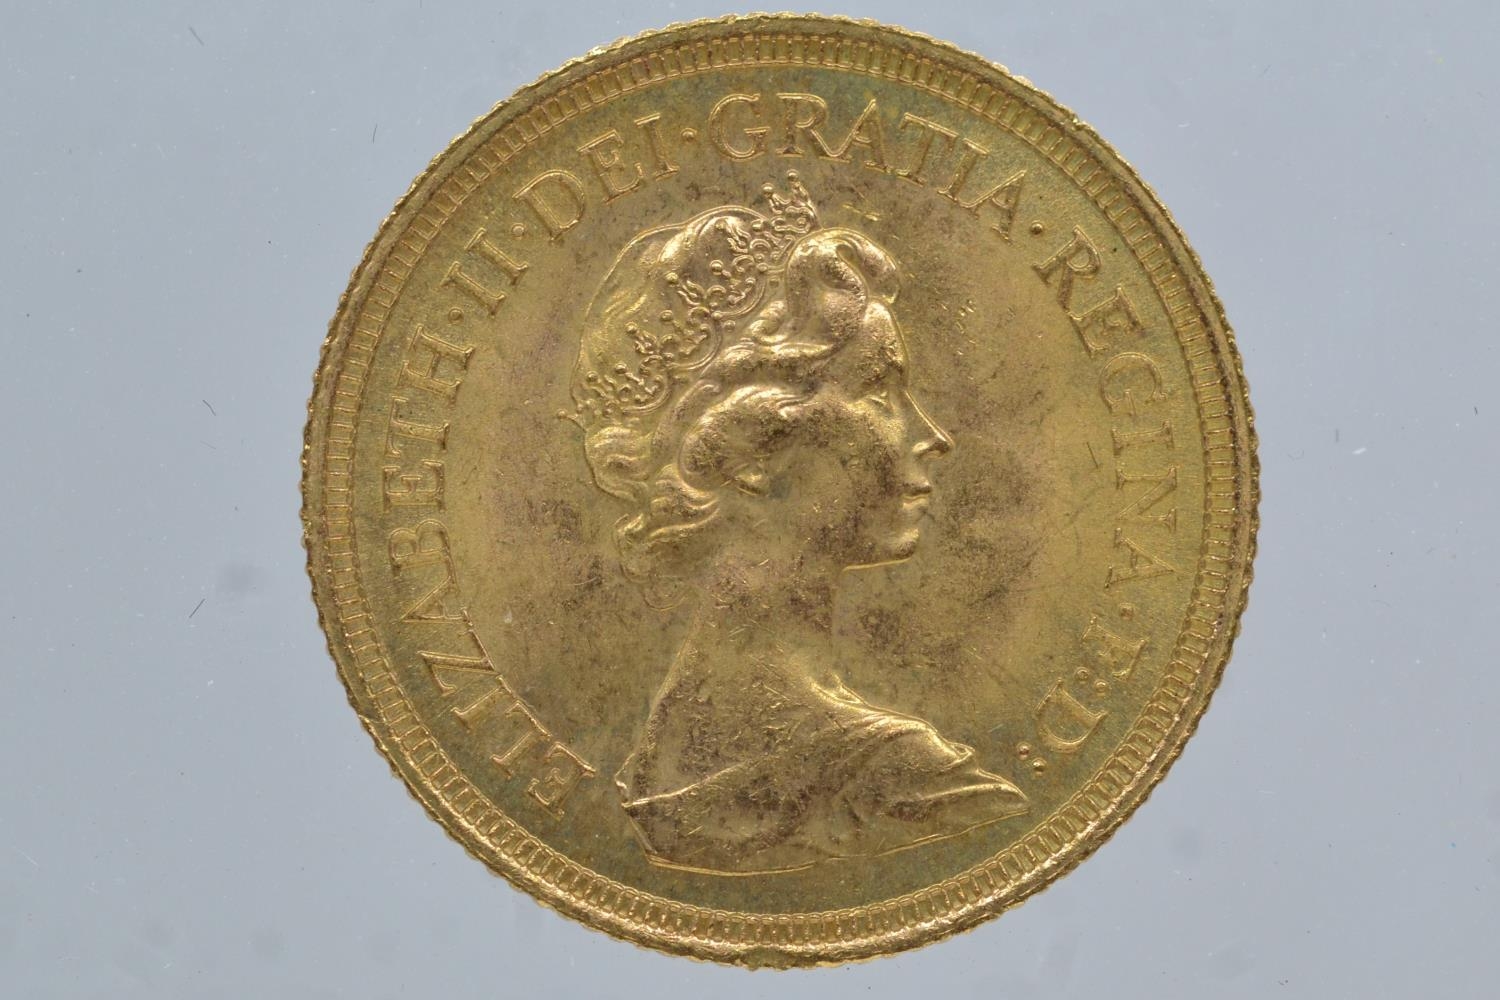 1974 Elizabeth II full sovereign  - Image 2 of 2